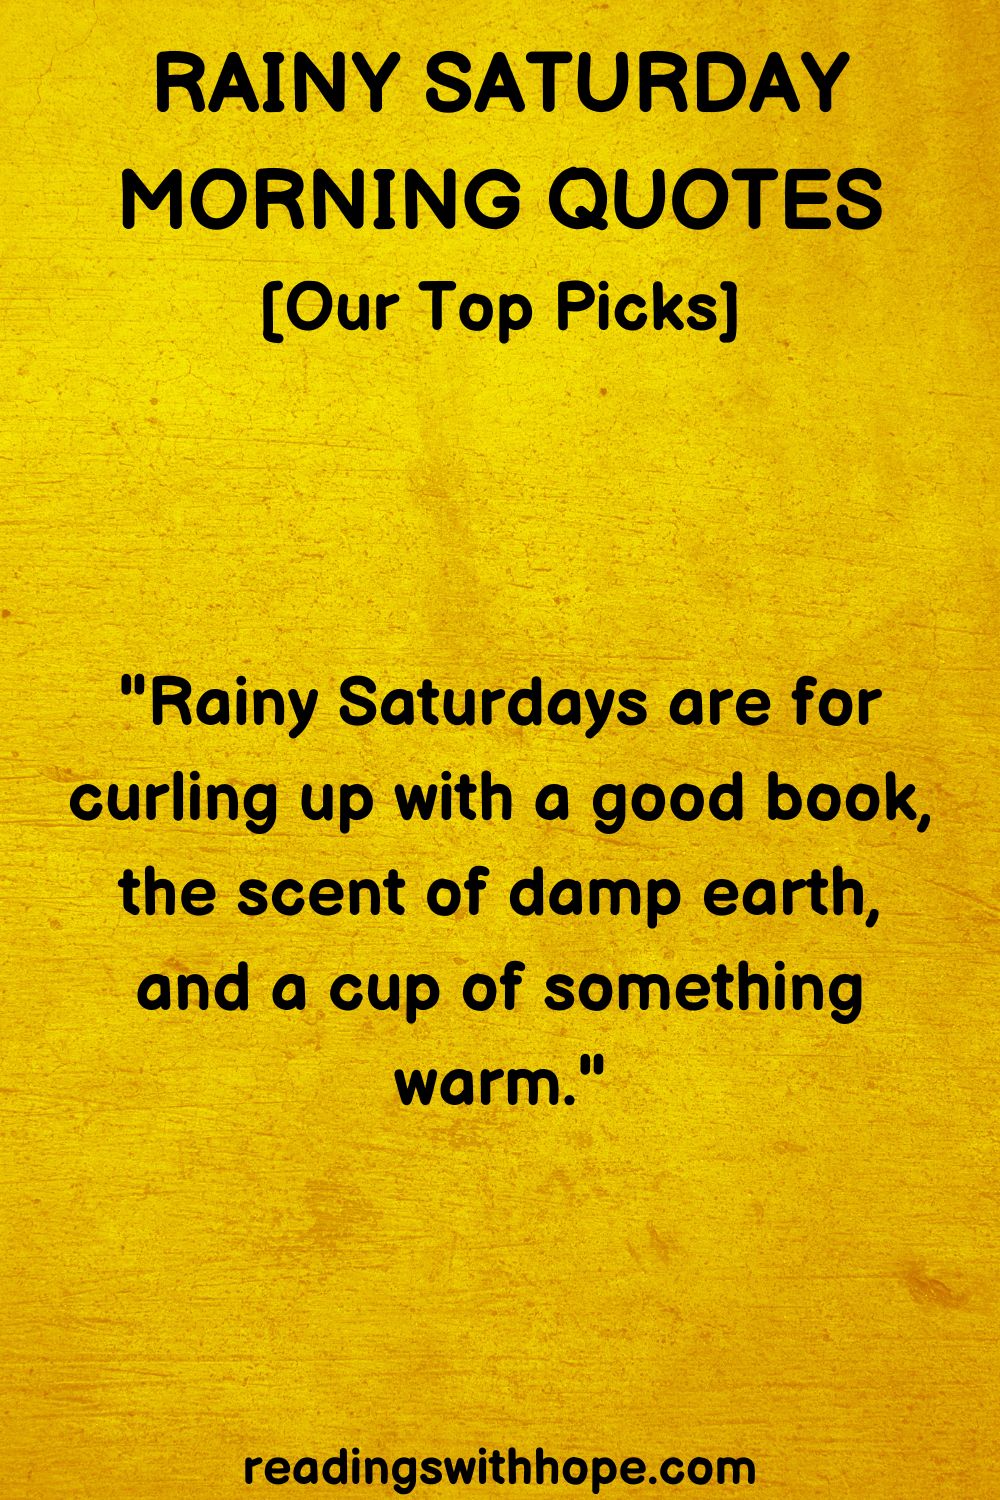 Rainy Saturday Morning Quotes